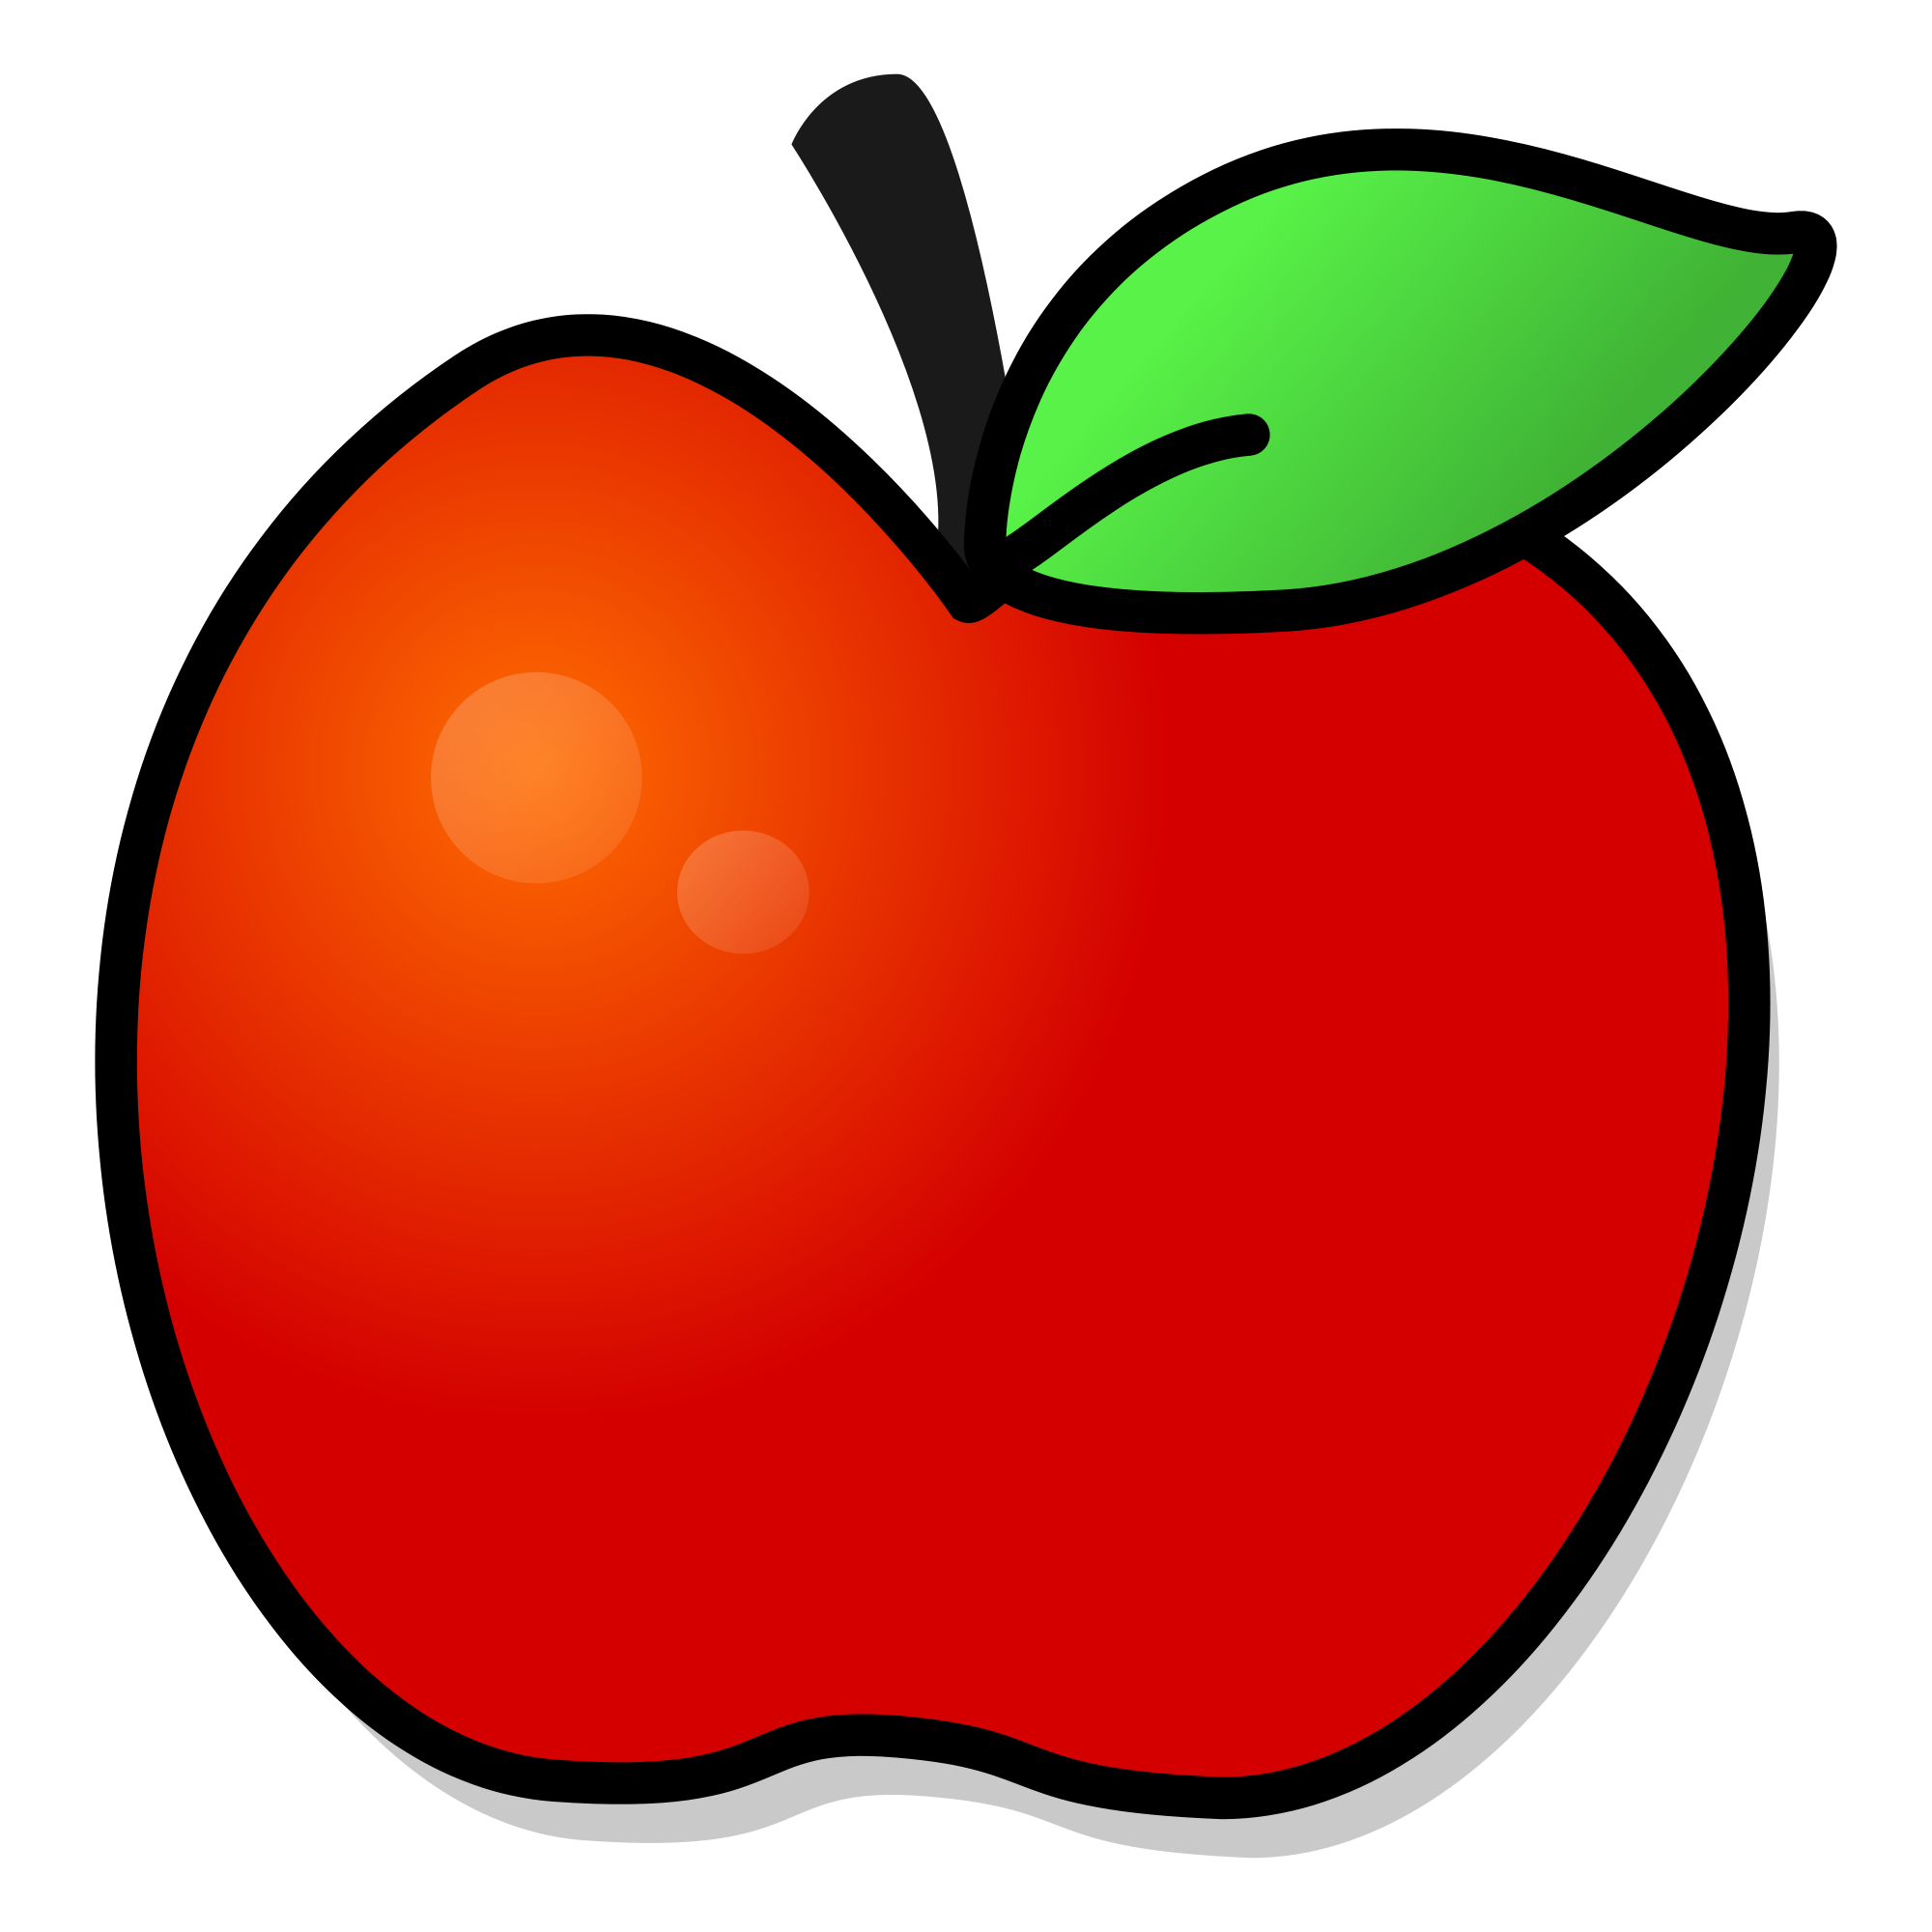 Free Apple Leaf Template Download Free Apple Leaf Template png images